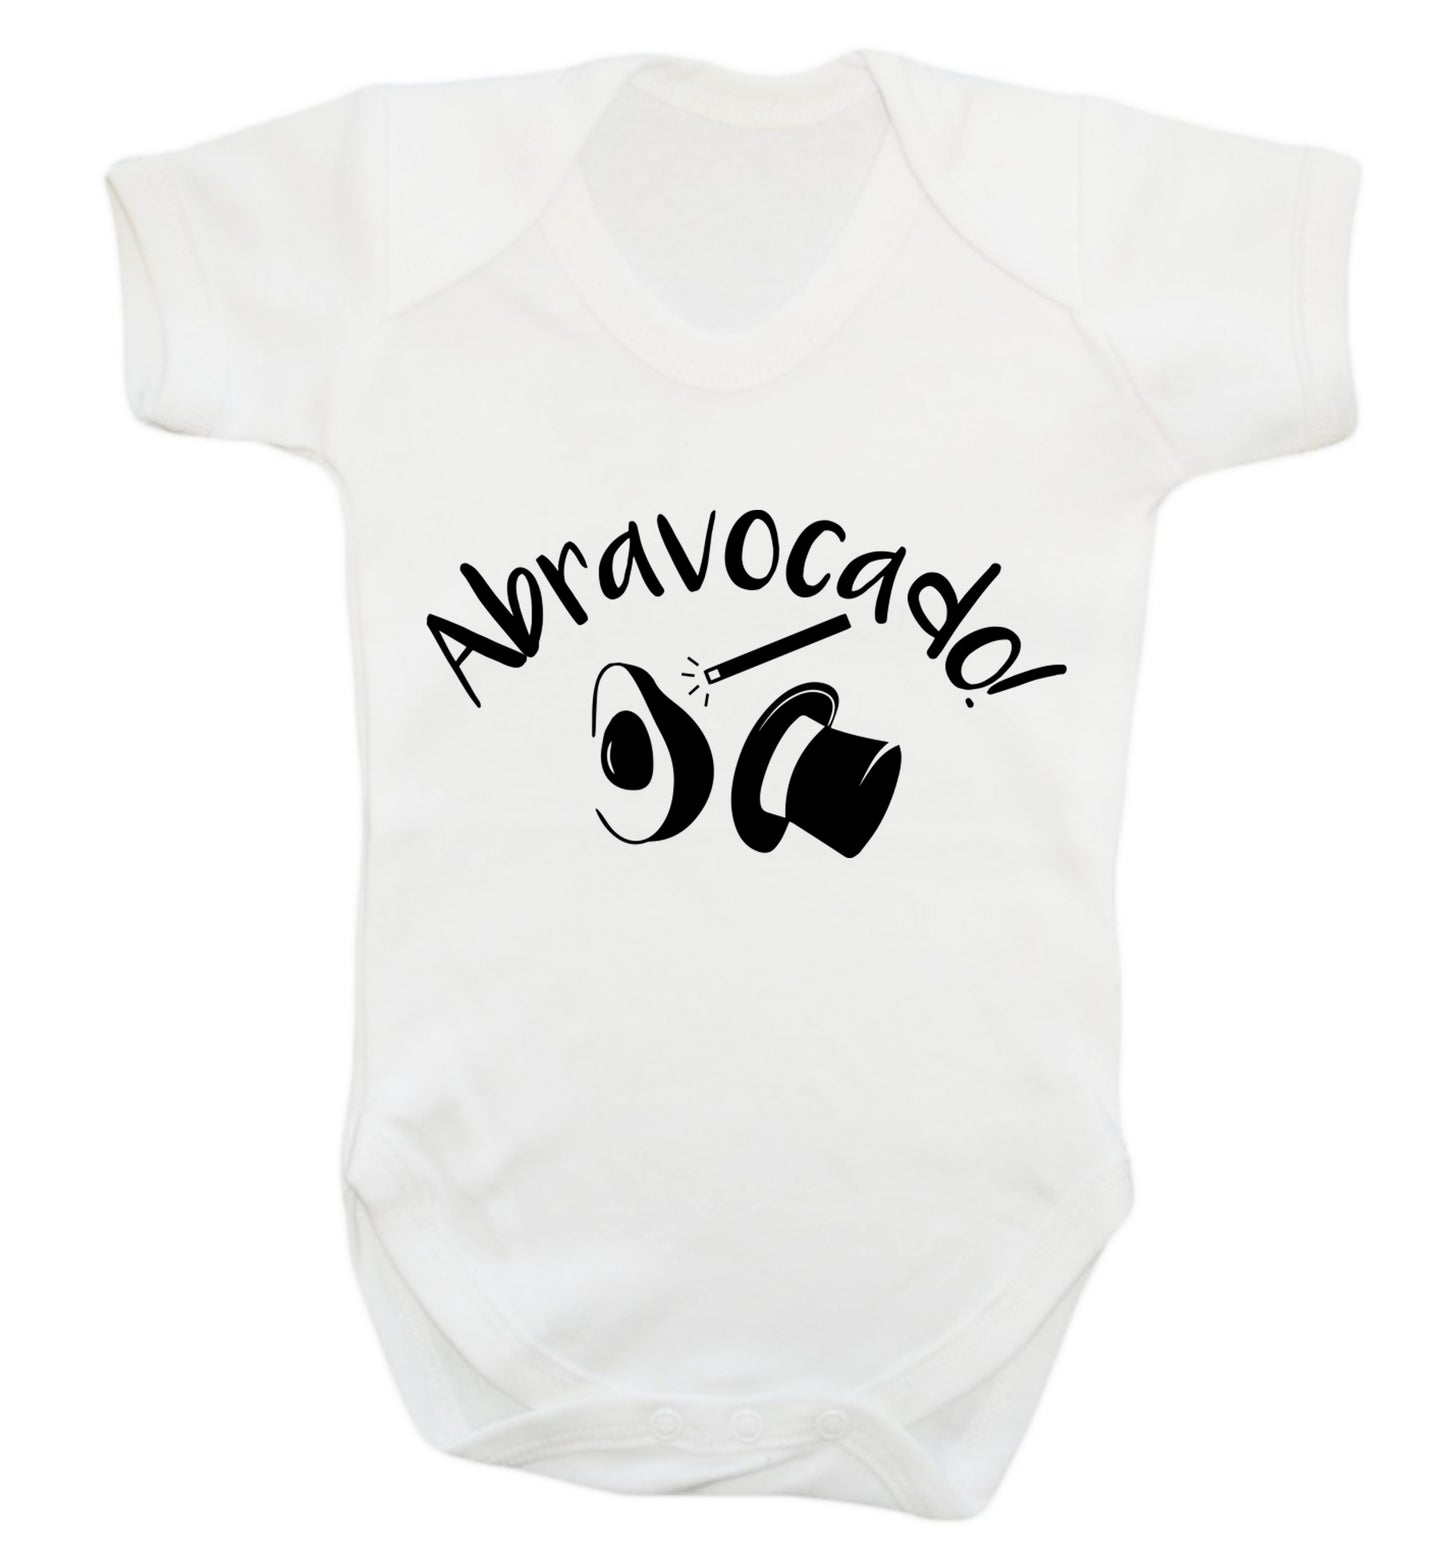 Abravocado Baby Vest white 18-24 months